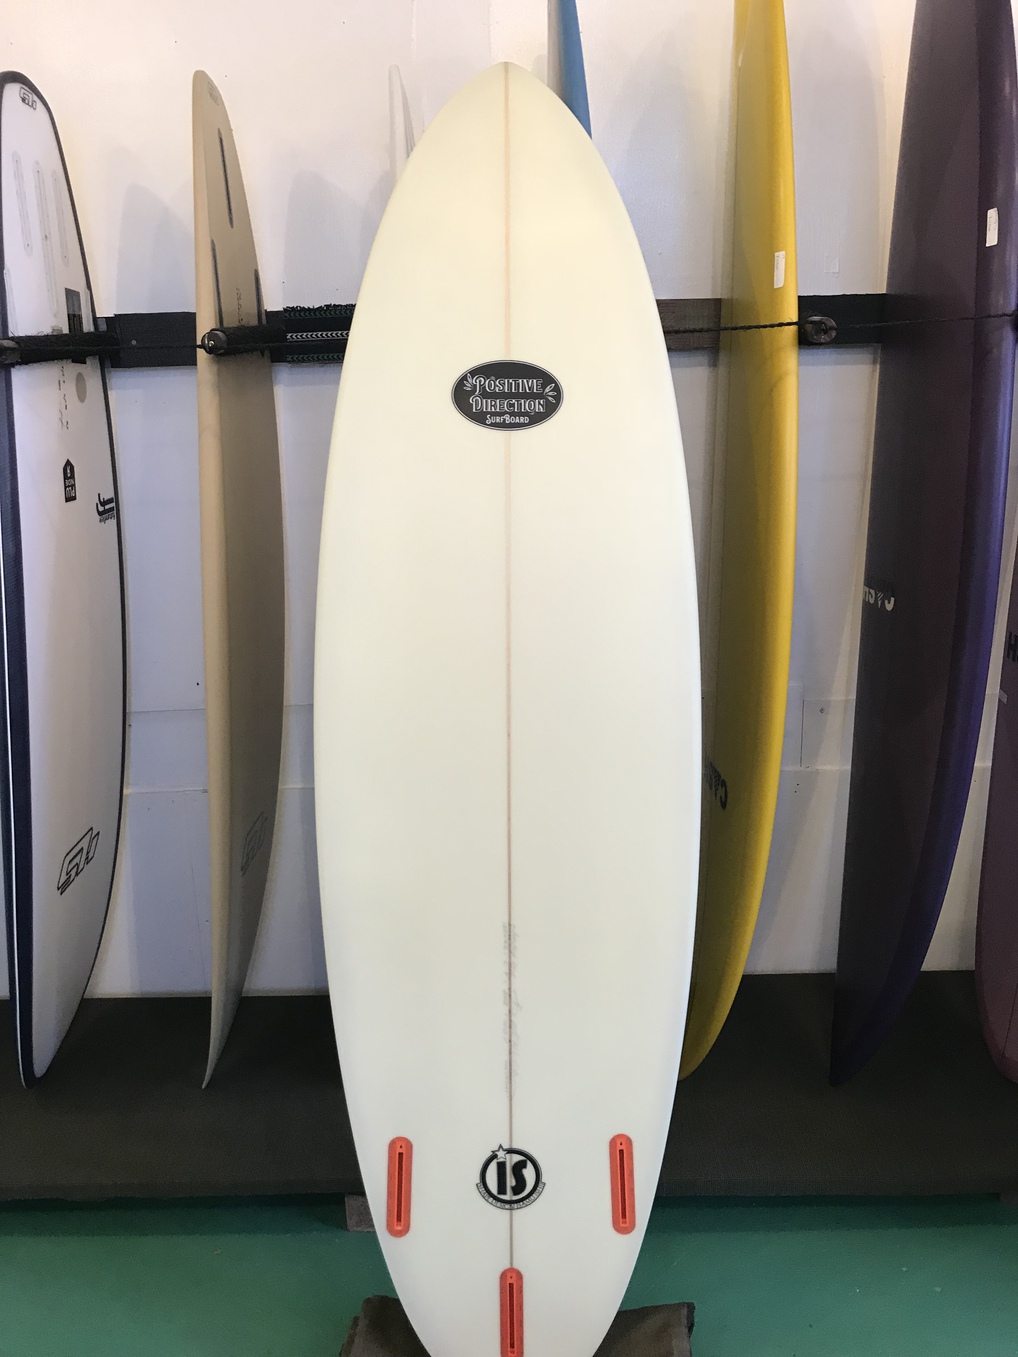 positive direction surf board